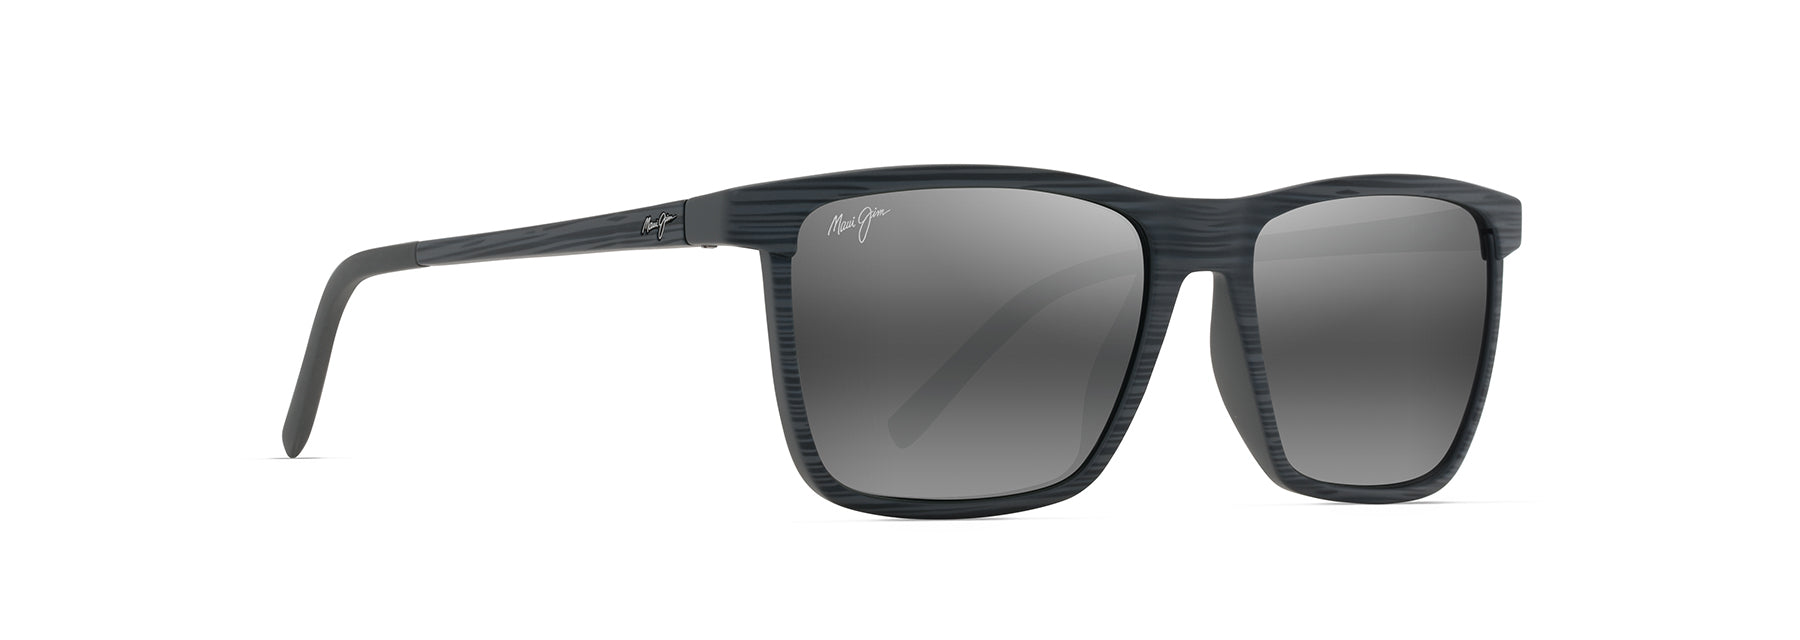 Maui Jim American Sunglass – One Sunglasses Way